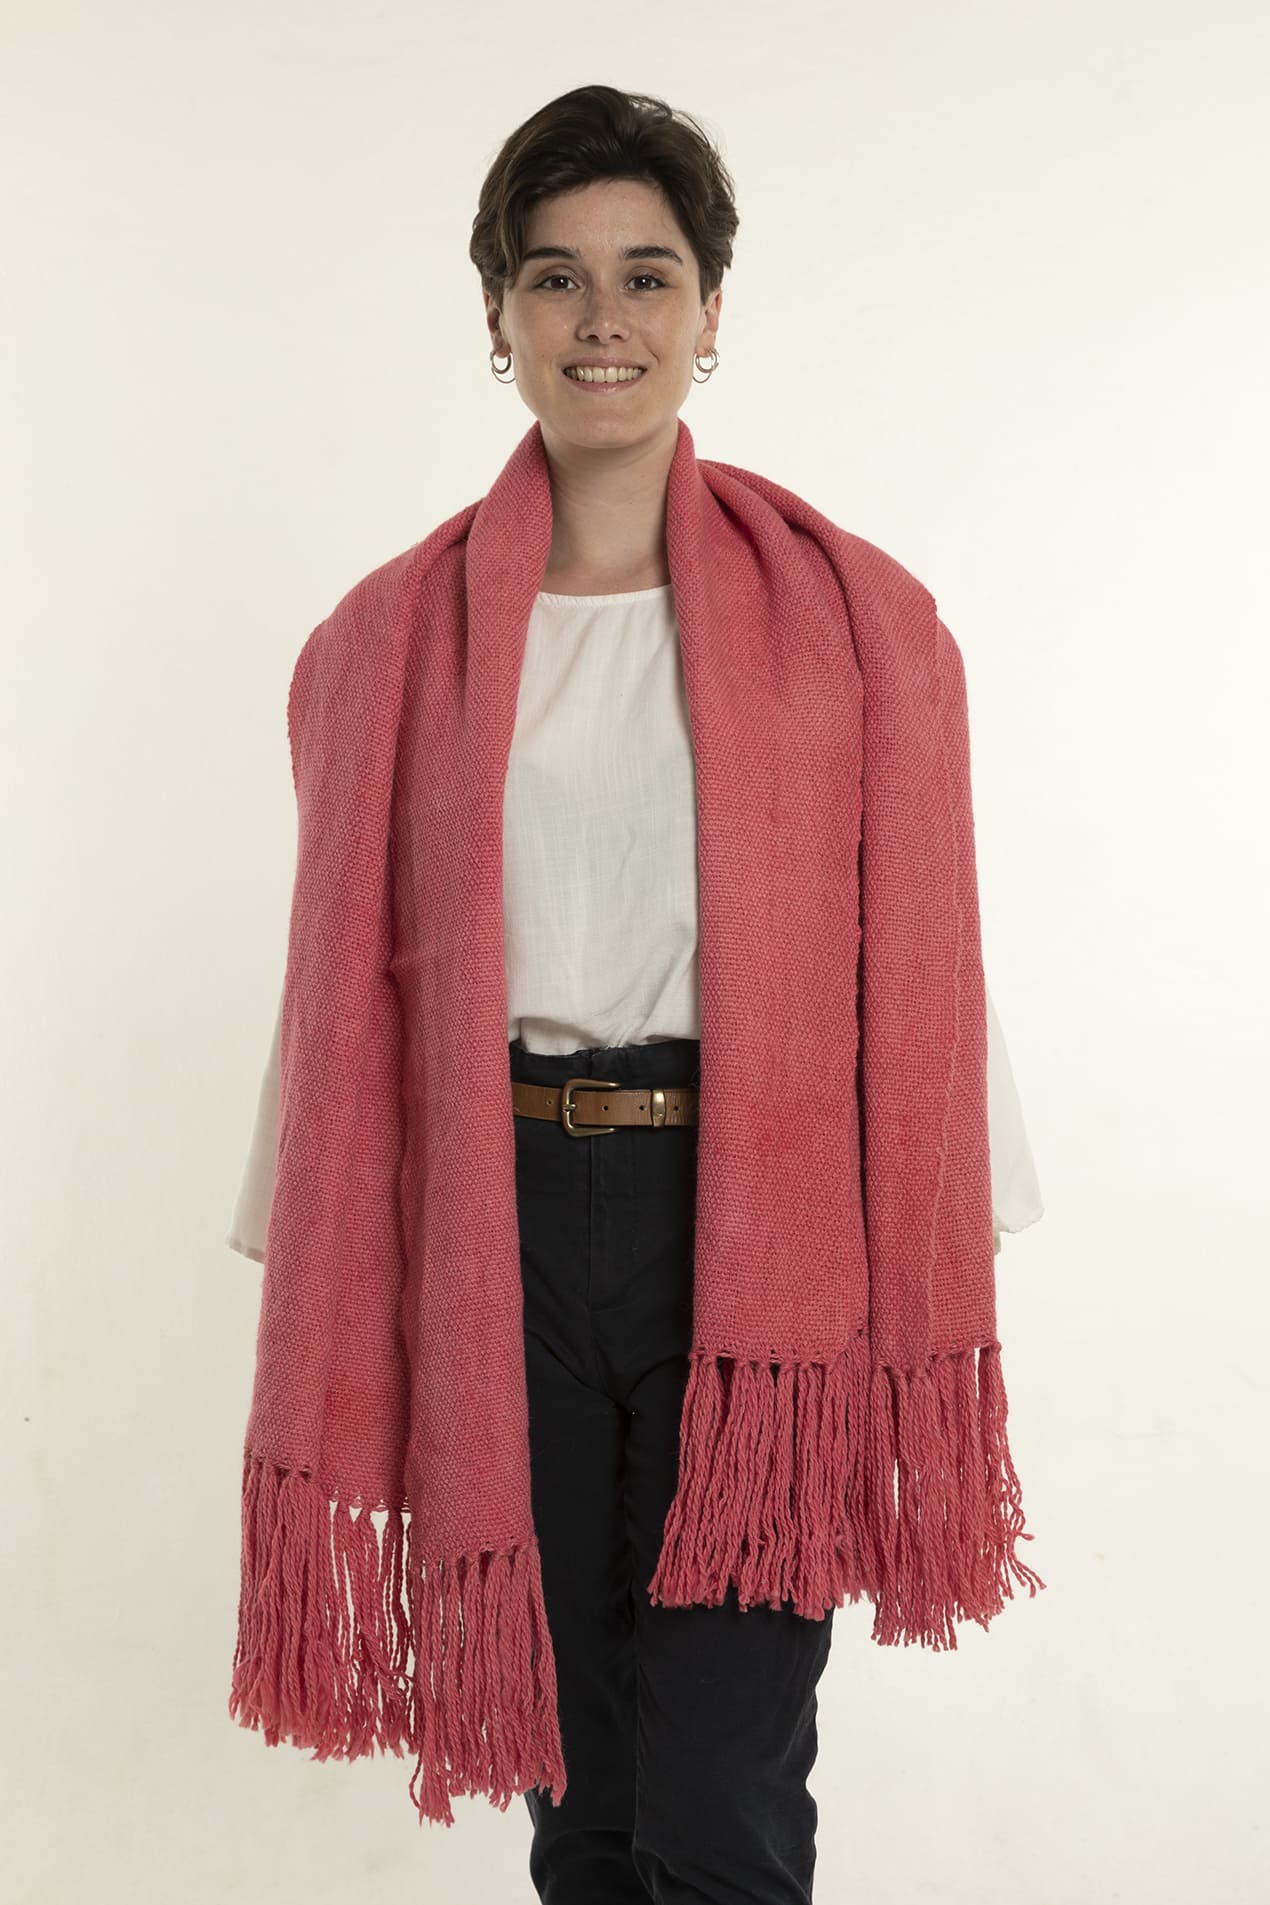 XL Schal Rosa aus Lama Wolle